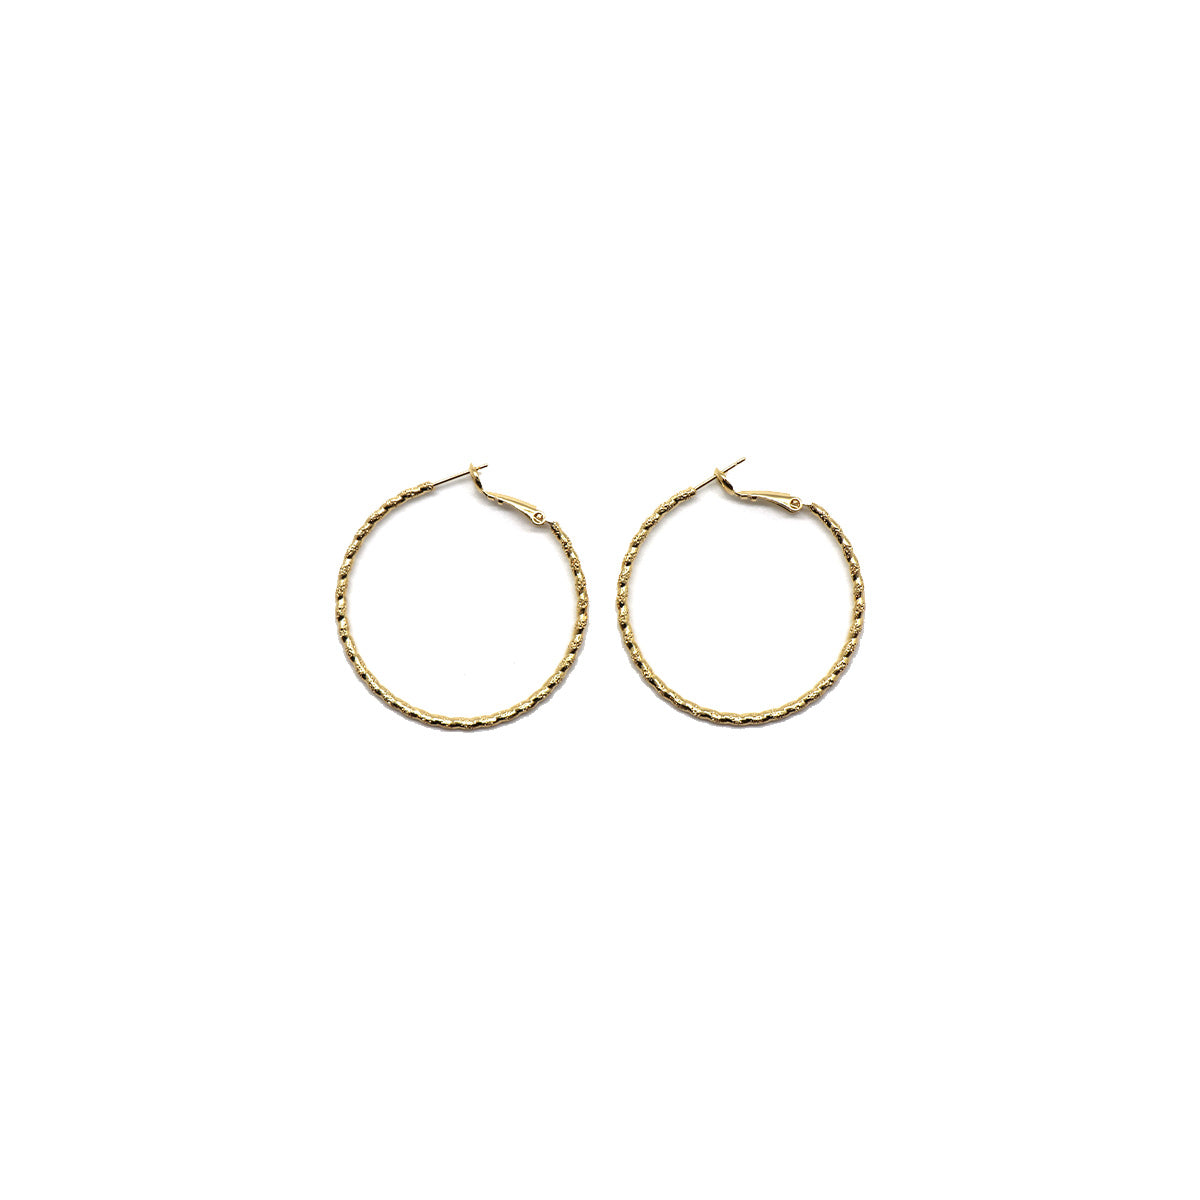 1" gold hoop earring